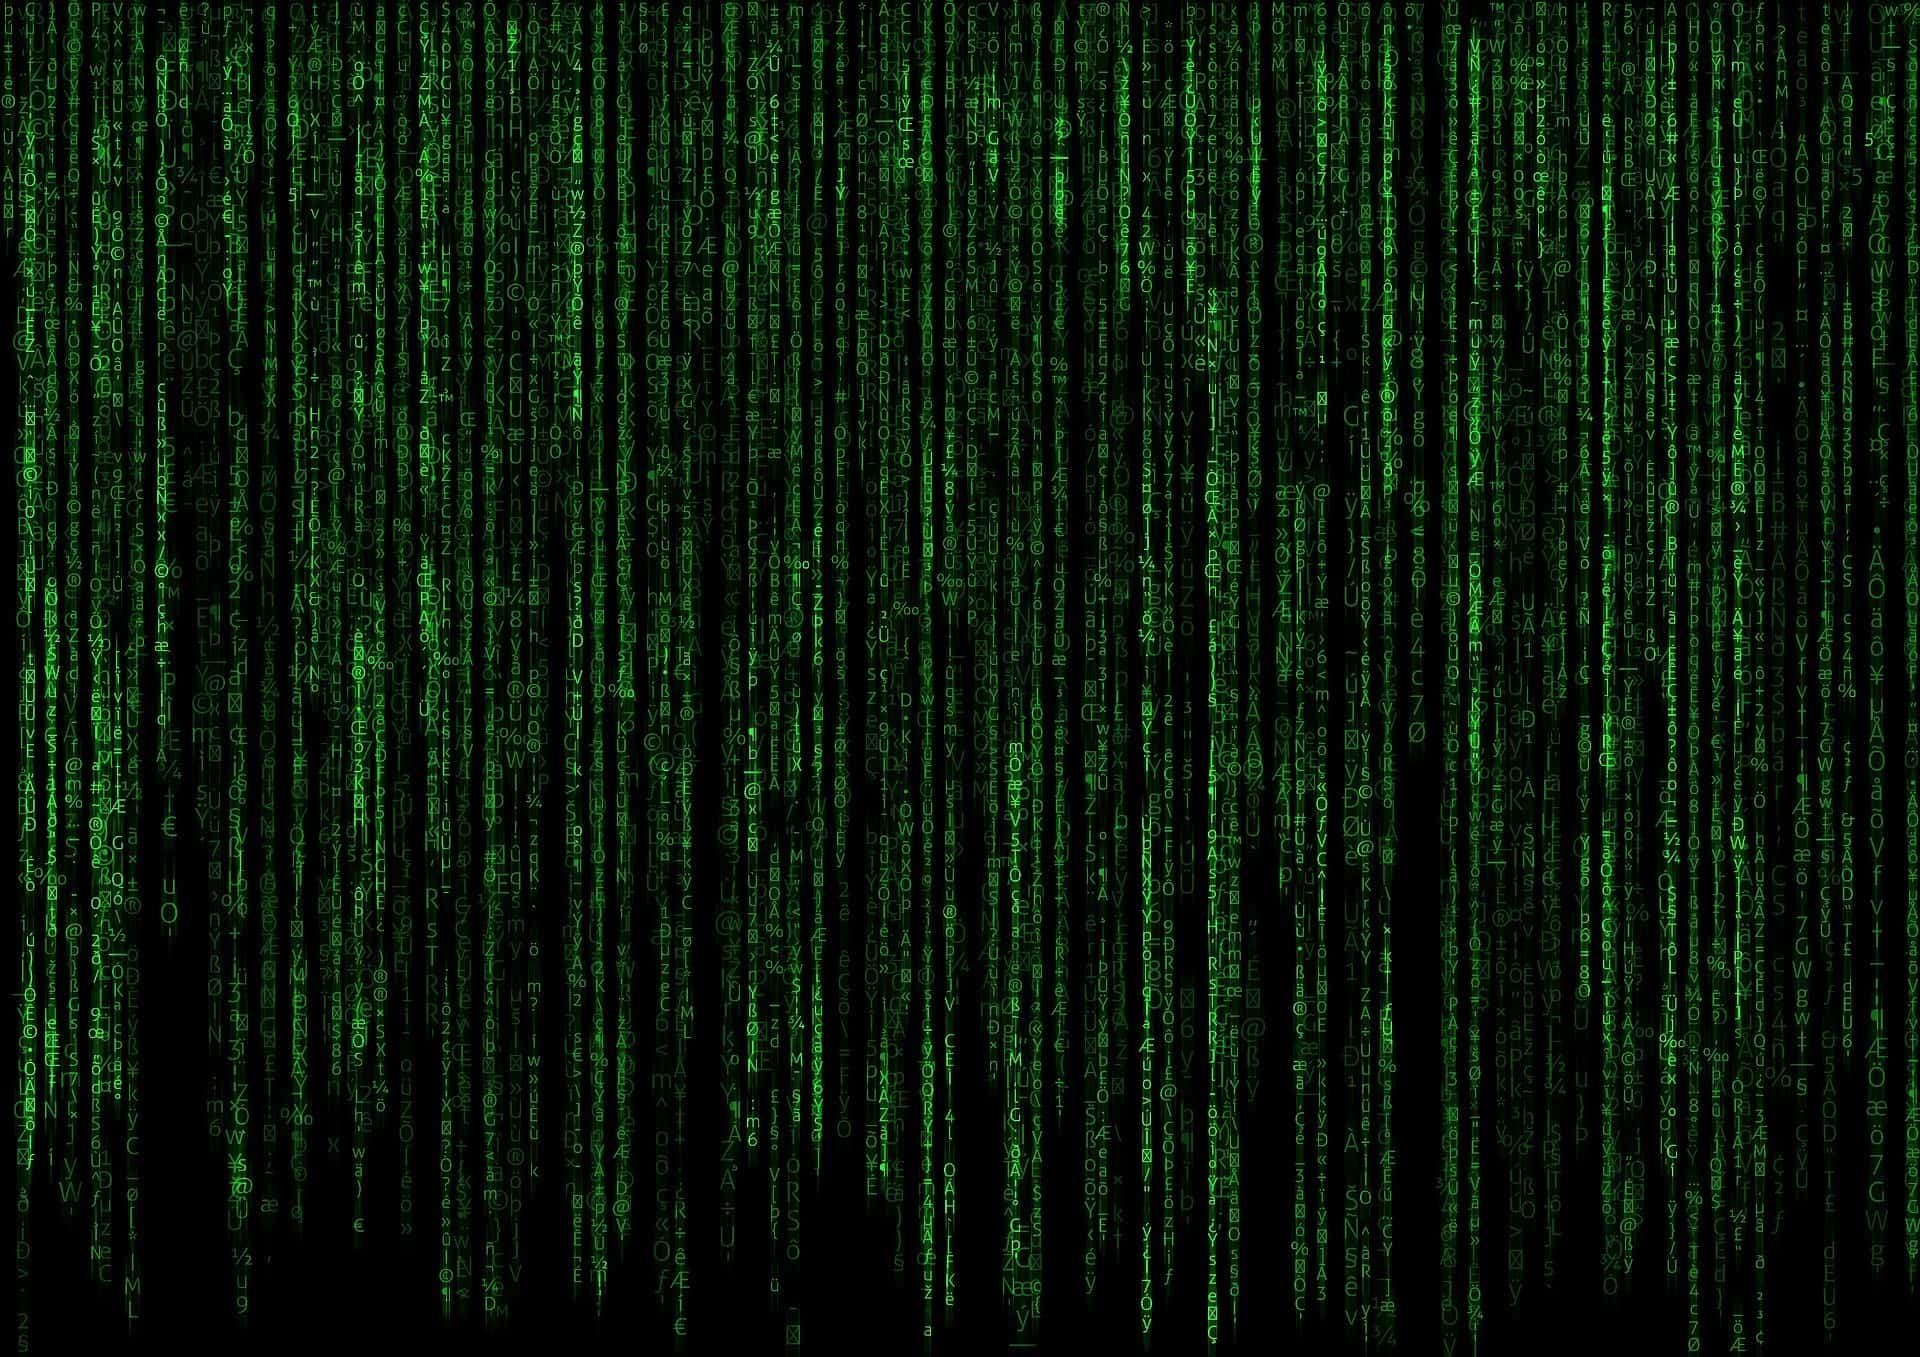 Green data cascading down the screen, matrix style